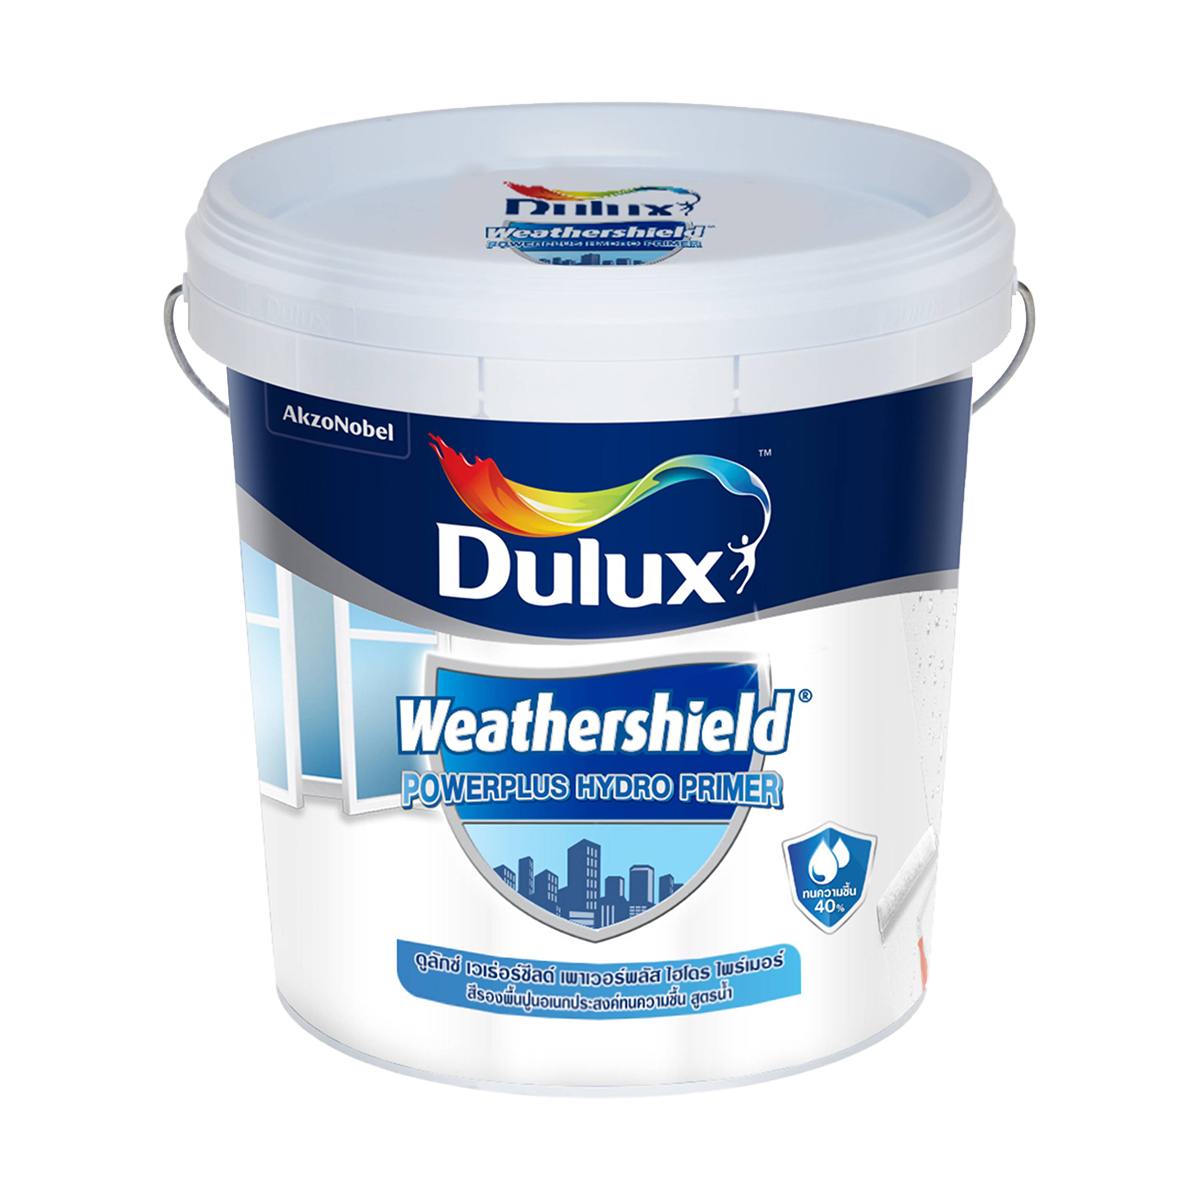 Dulux WeatherShield Power Plus